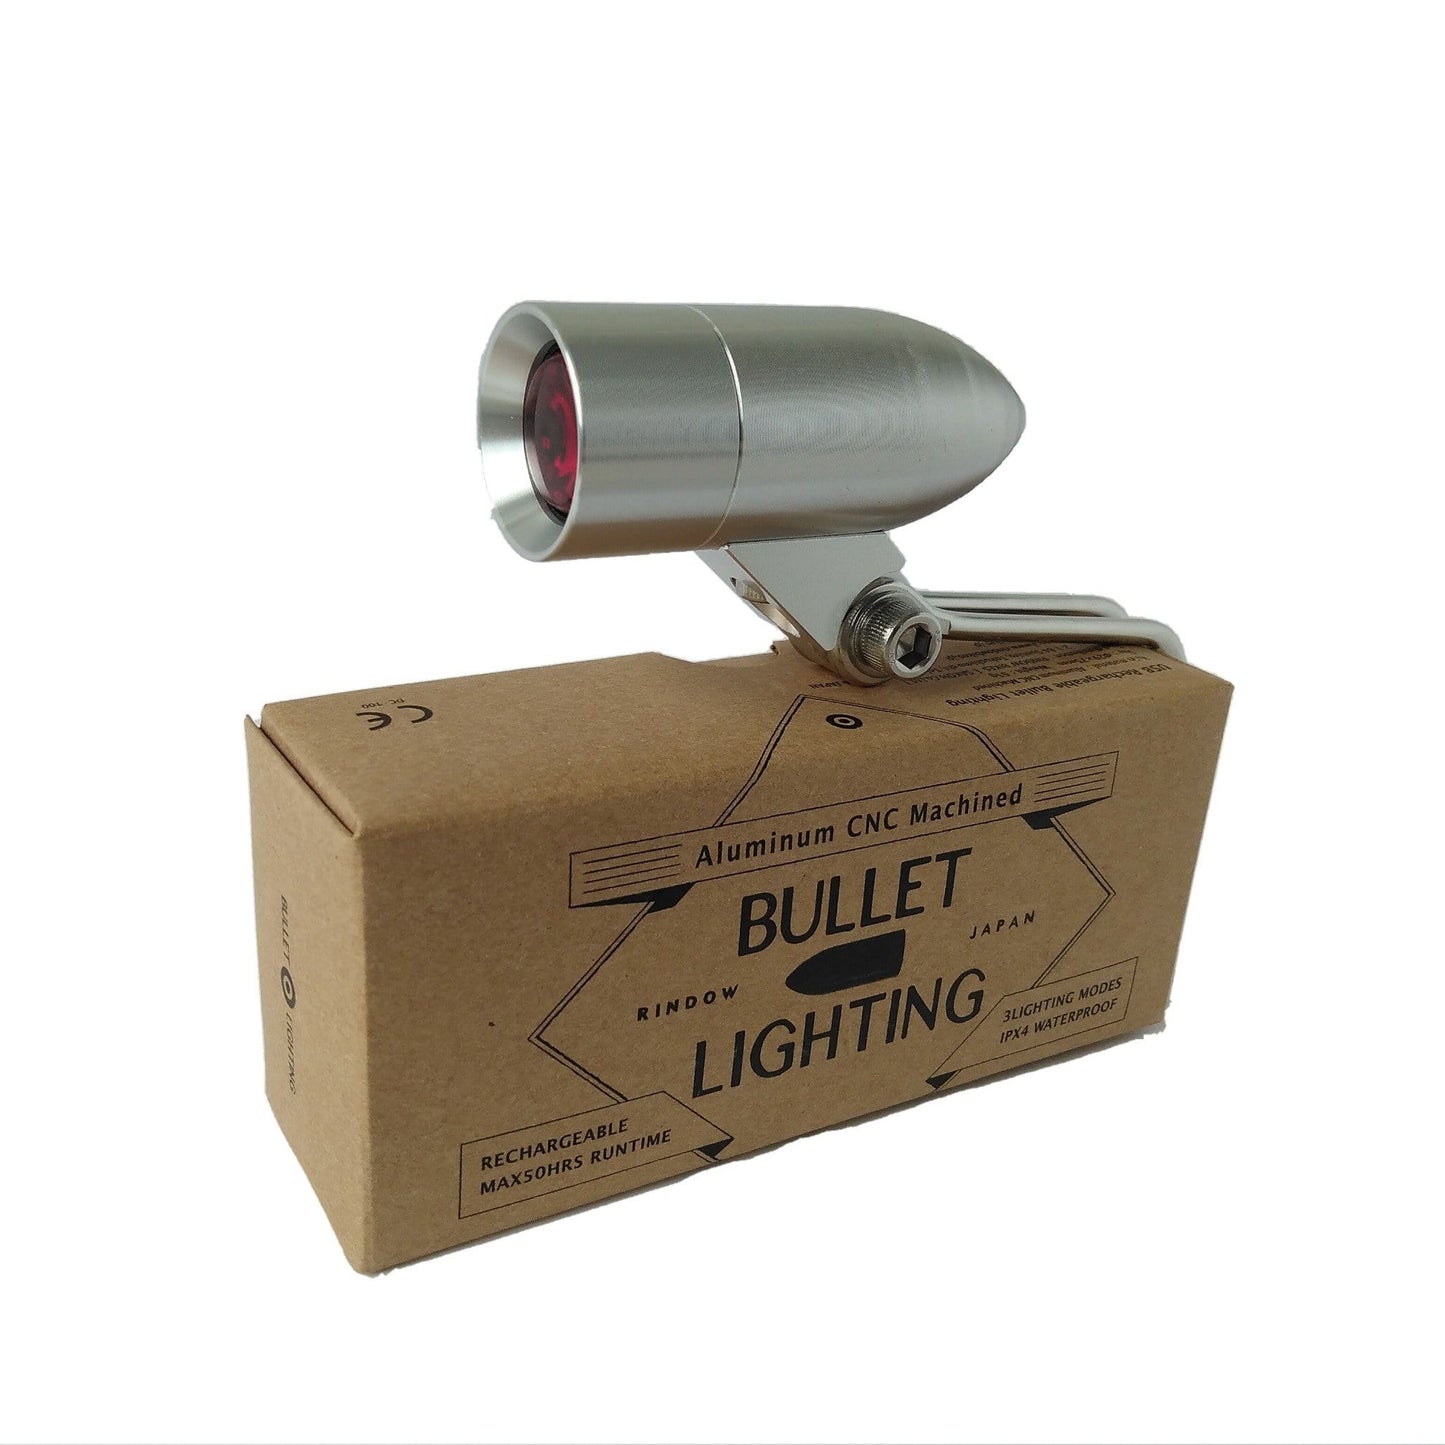 Rindow Bullet Lighting rear bicycle light on retail box